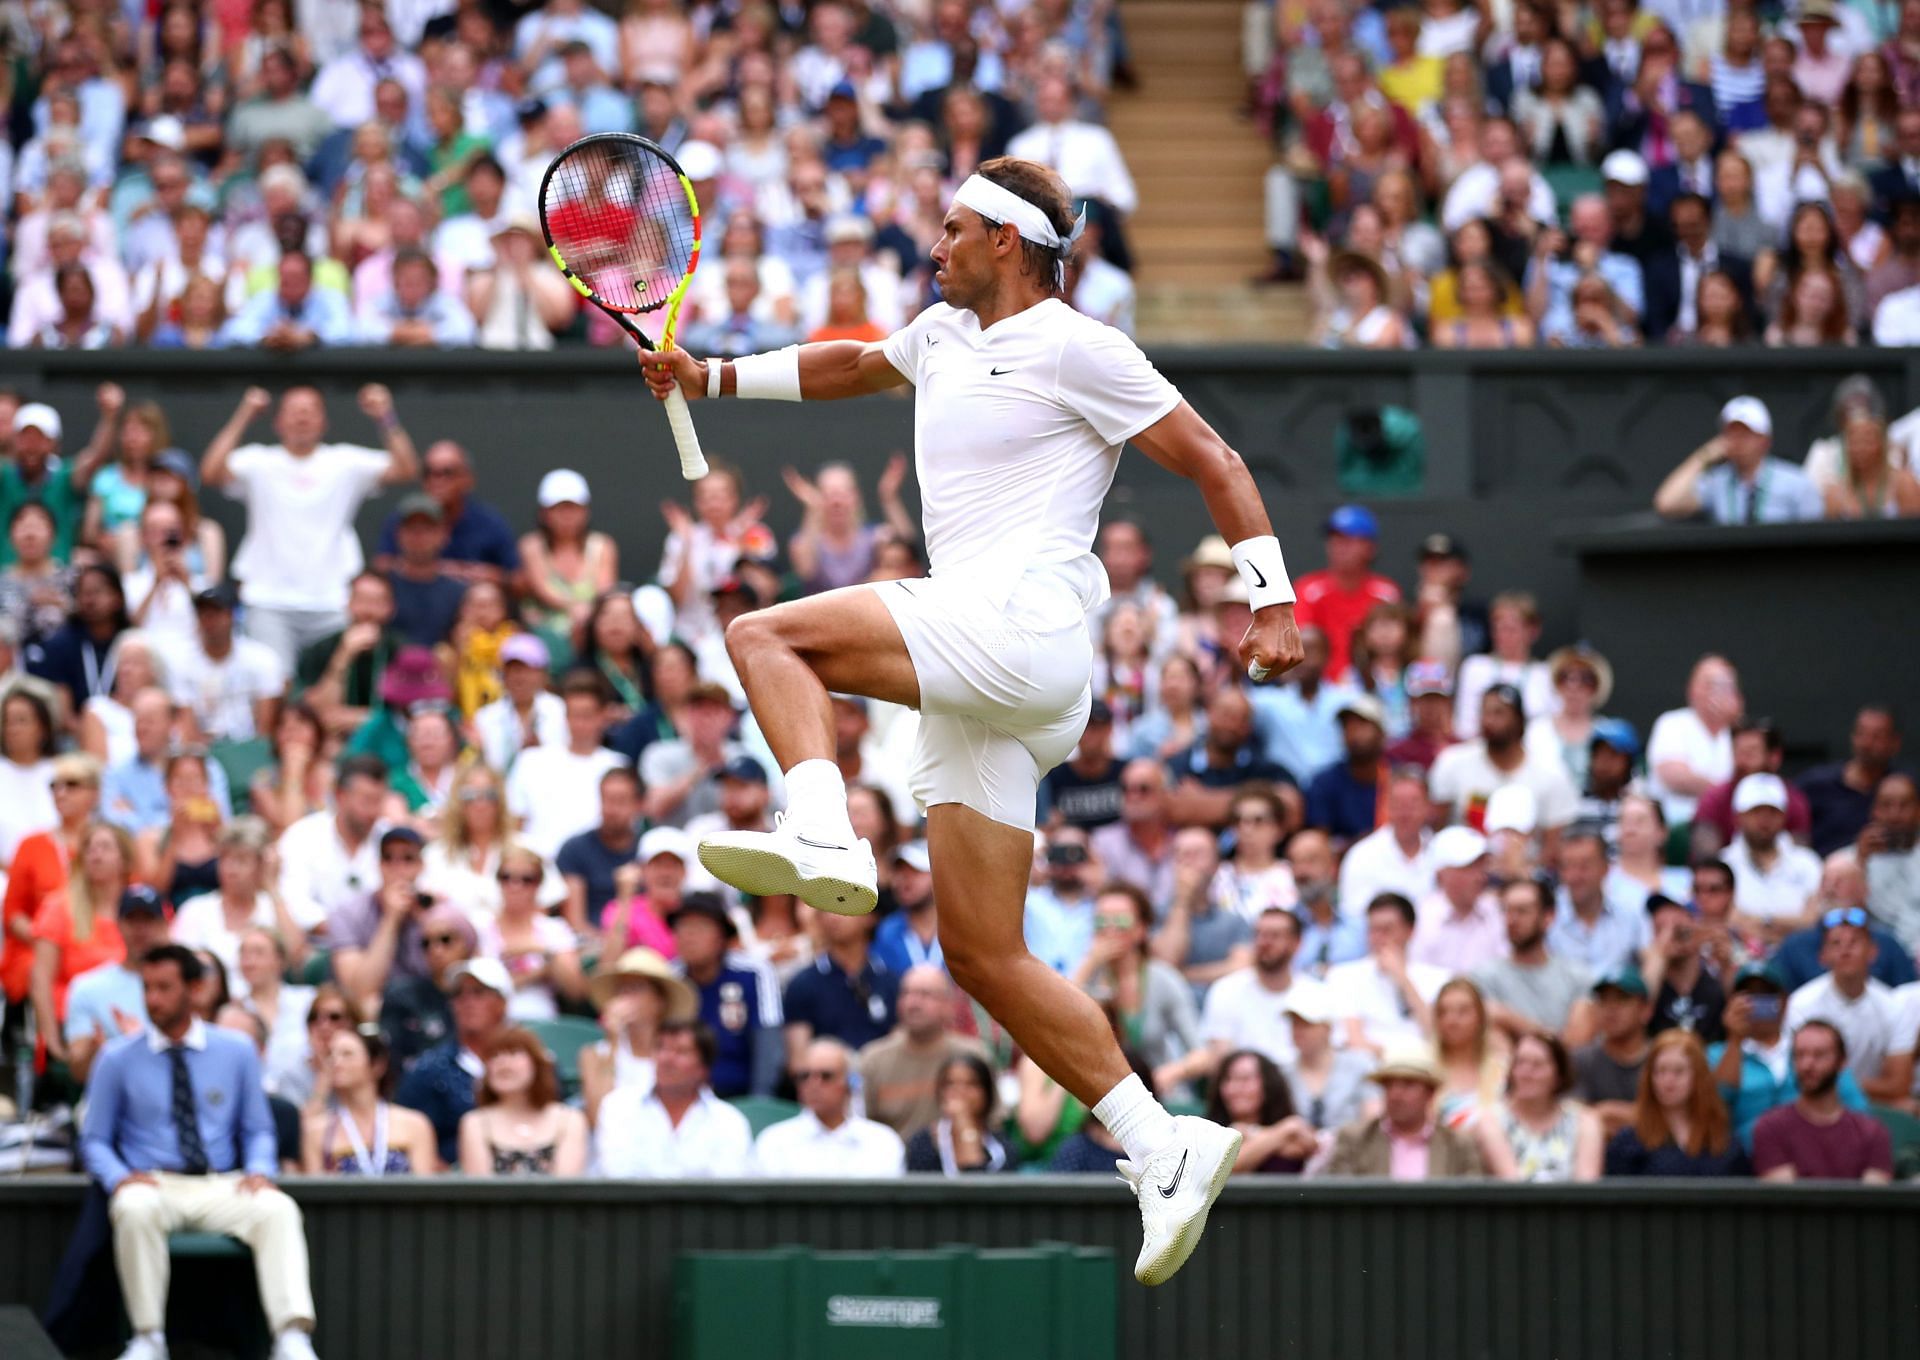 Rafael Nadal celebrates his win over Nick Kyrgios at Wimbledon 2019